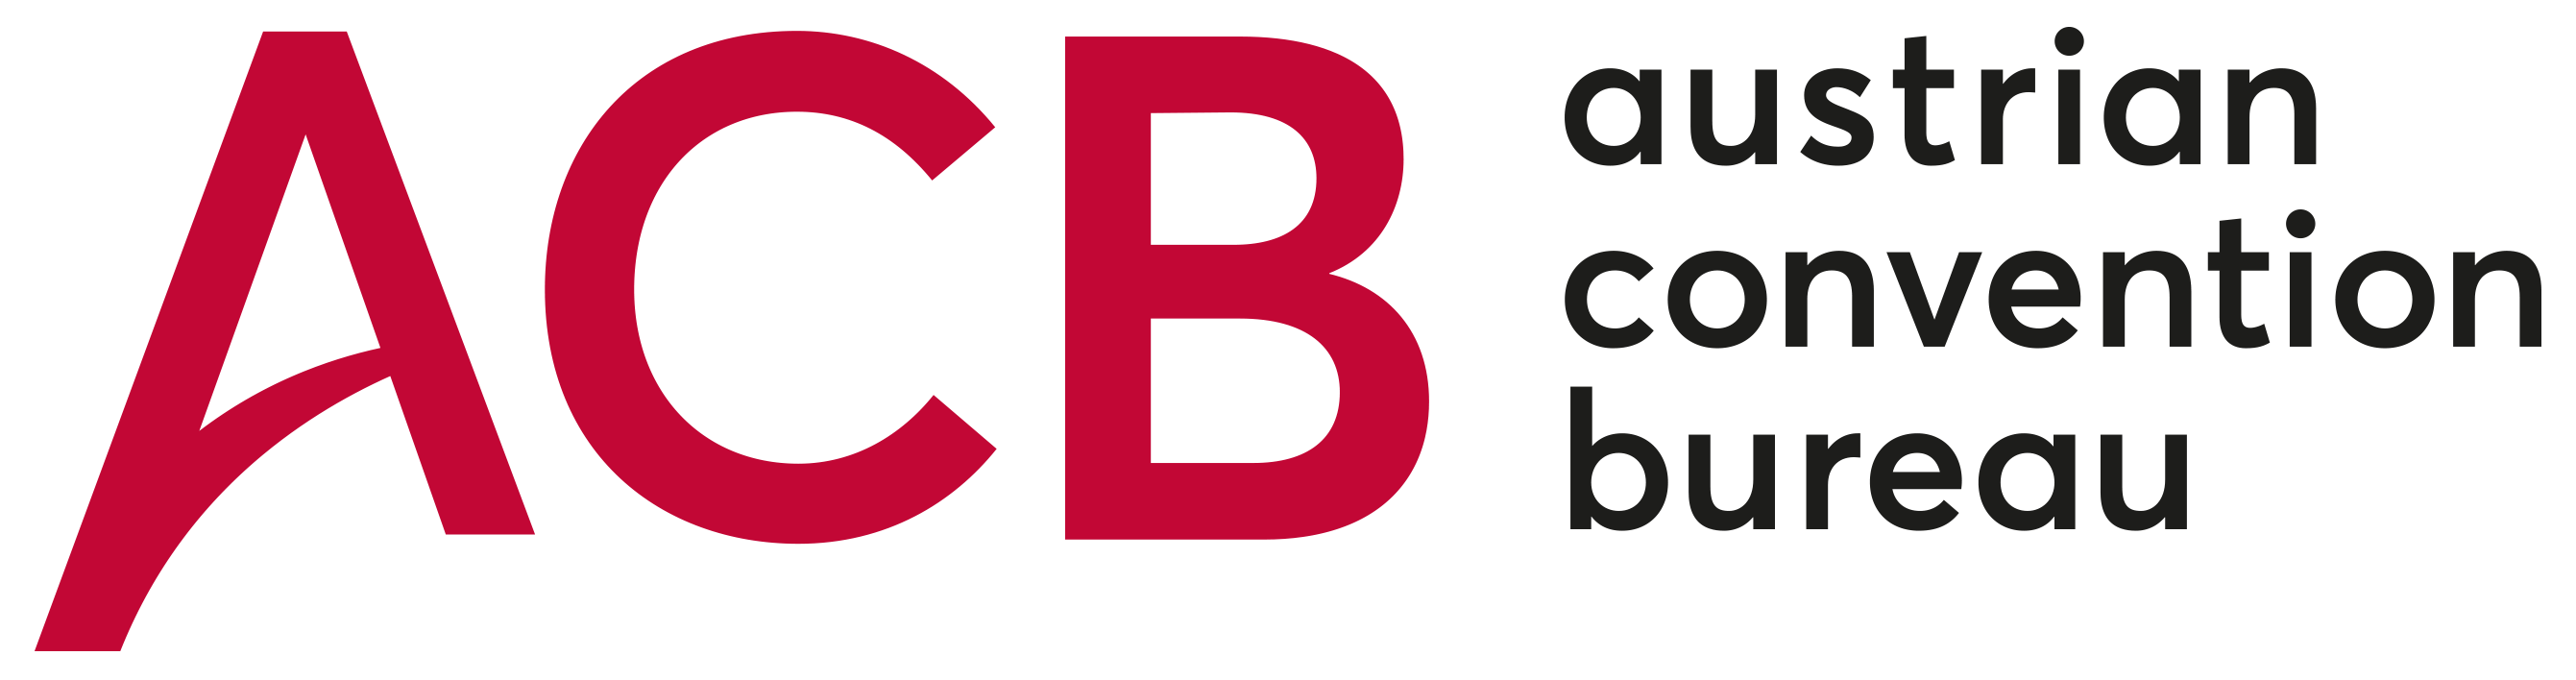 ACB – Austrian Convention Bureau